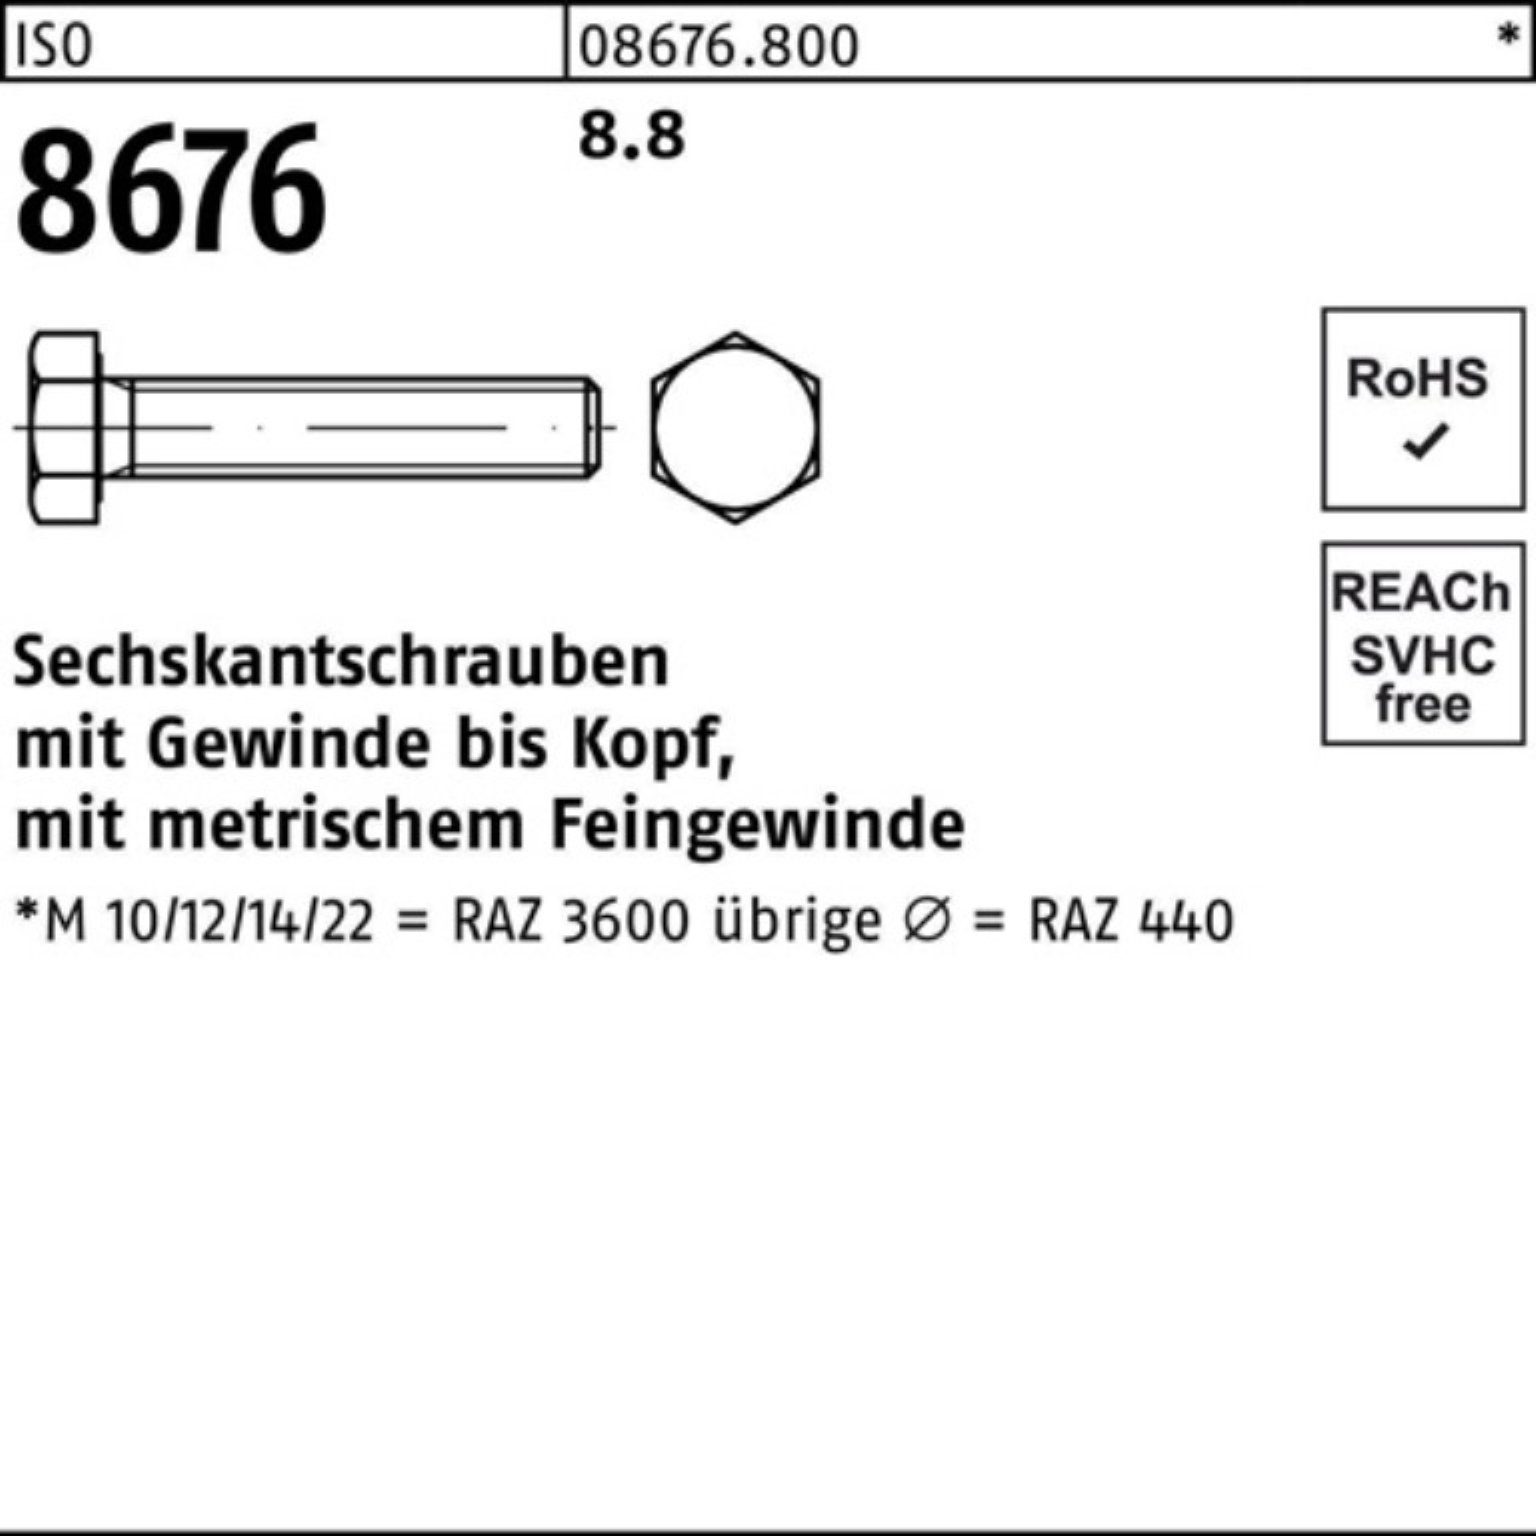 100 Stück Sechskantschraube 8676 8.8 Pack I VG 50 ISO Reyher Sechskantschraube M12x1,25x 100er